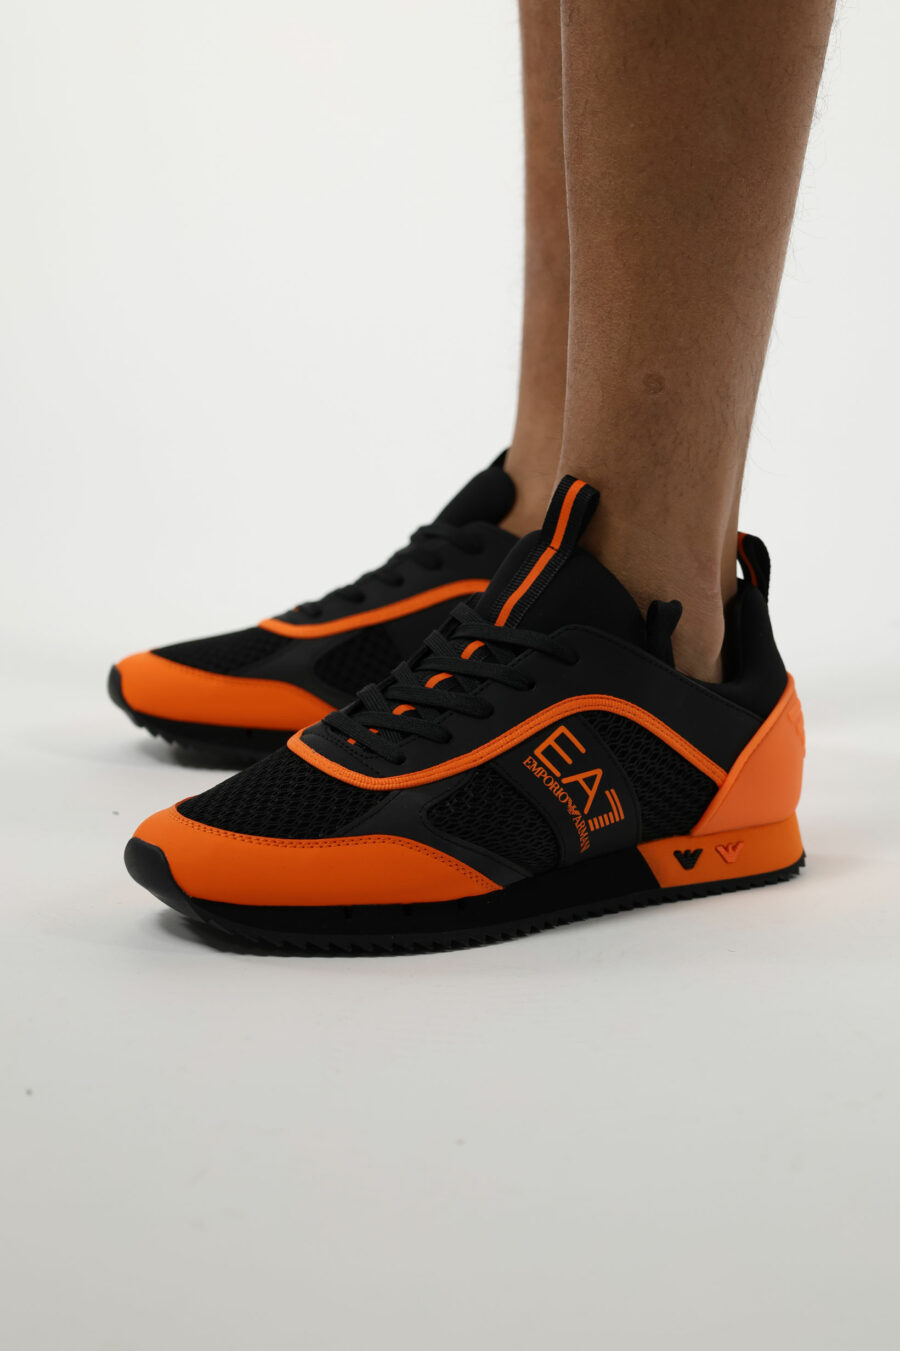 Sapatilhas pretas com logótipo "lux identity" laranja - 110900